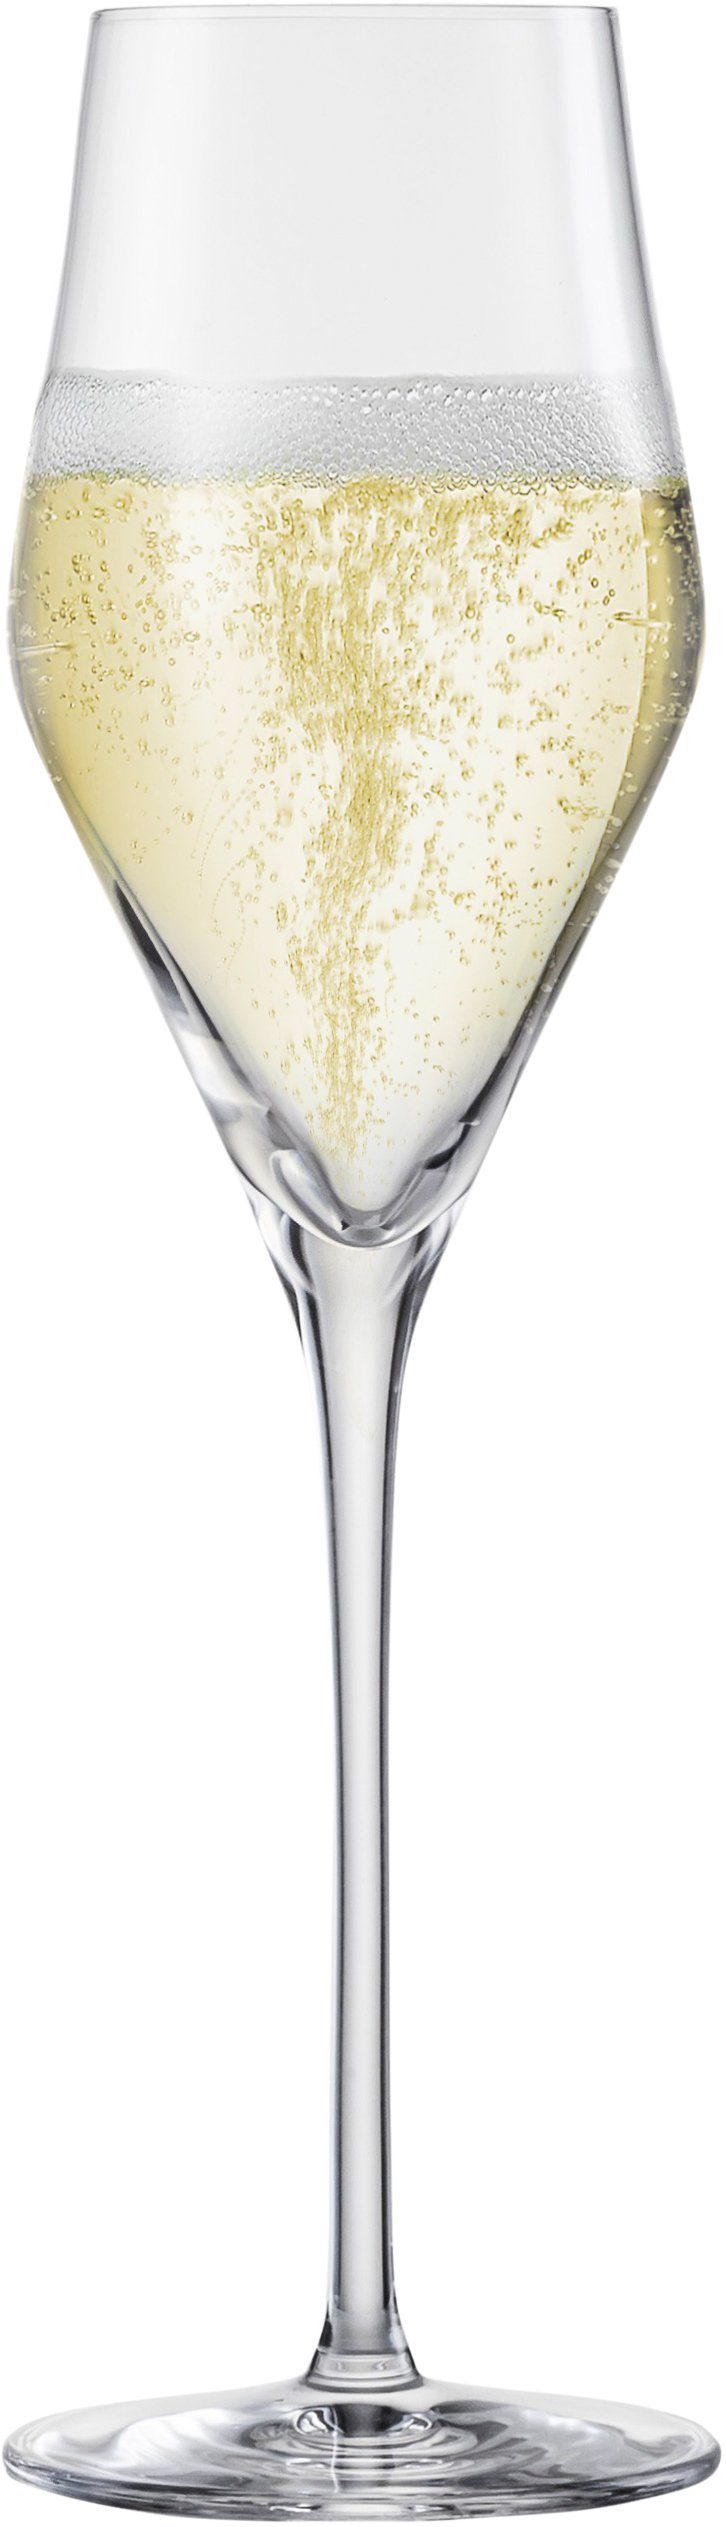 Eisch Champagnerglas Sky SensisPlus, Kristallglas, bleifrei, 260 ml, 4- teilig